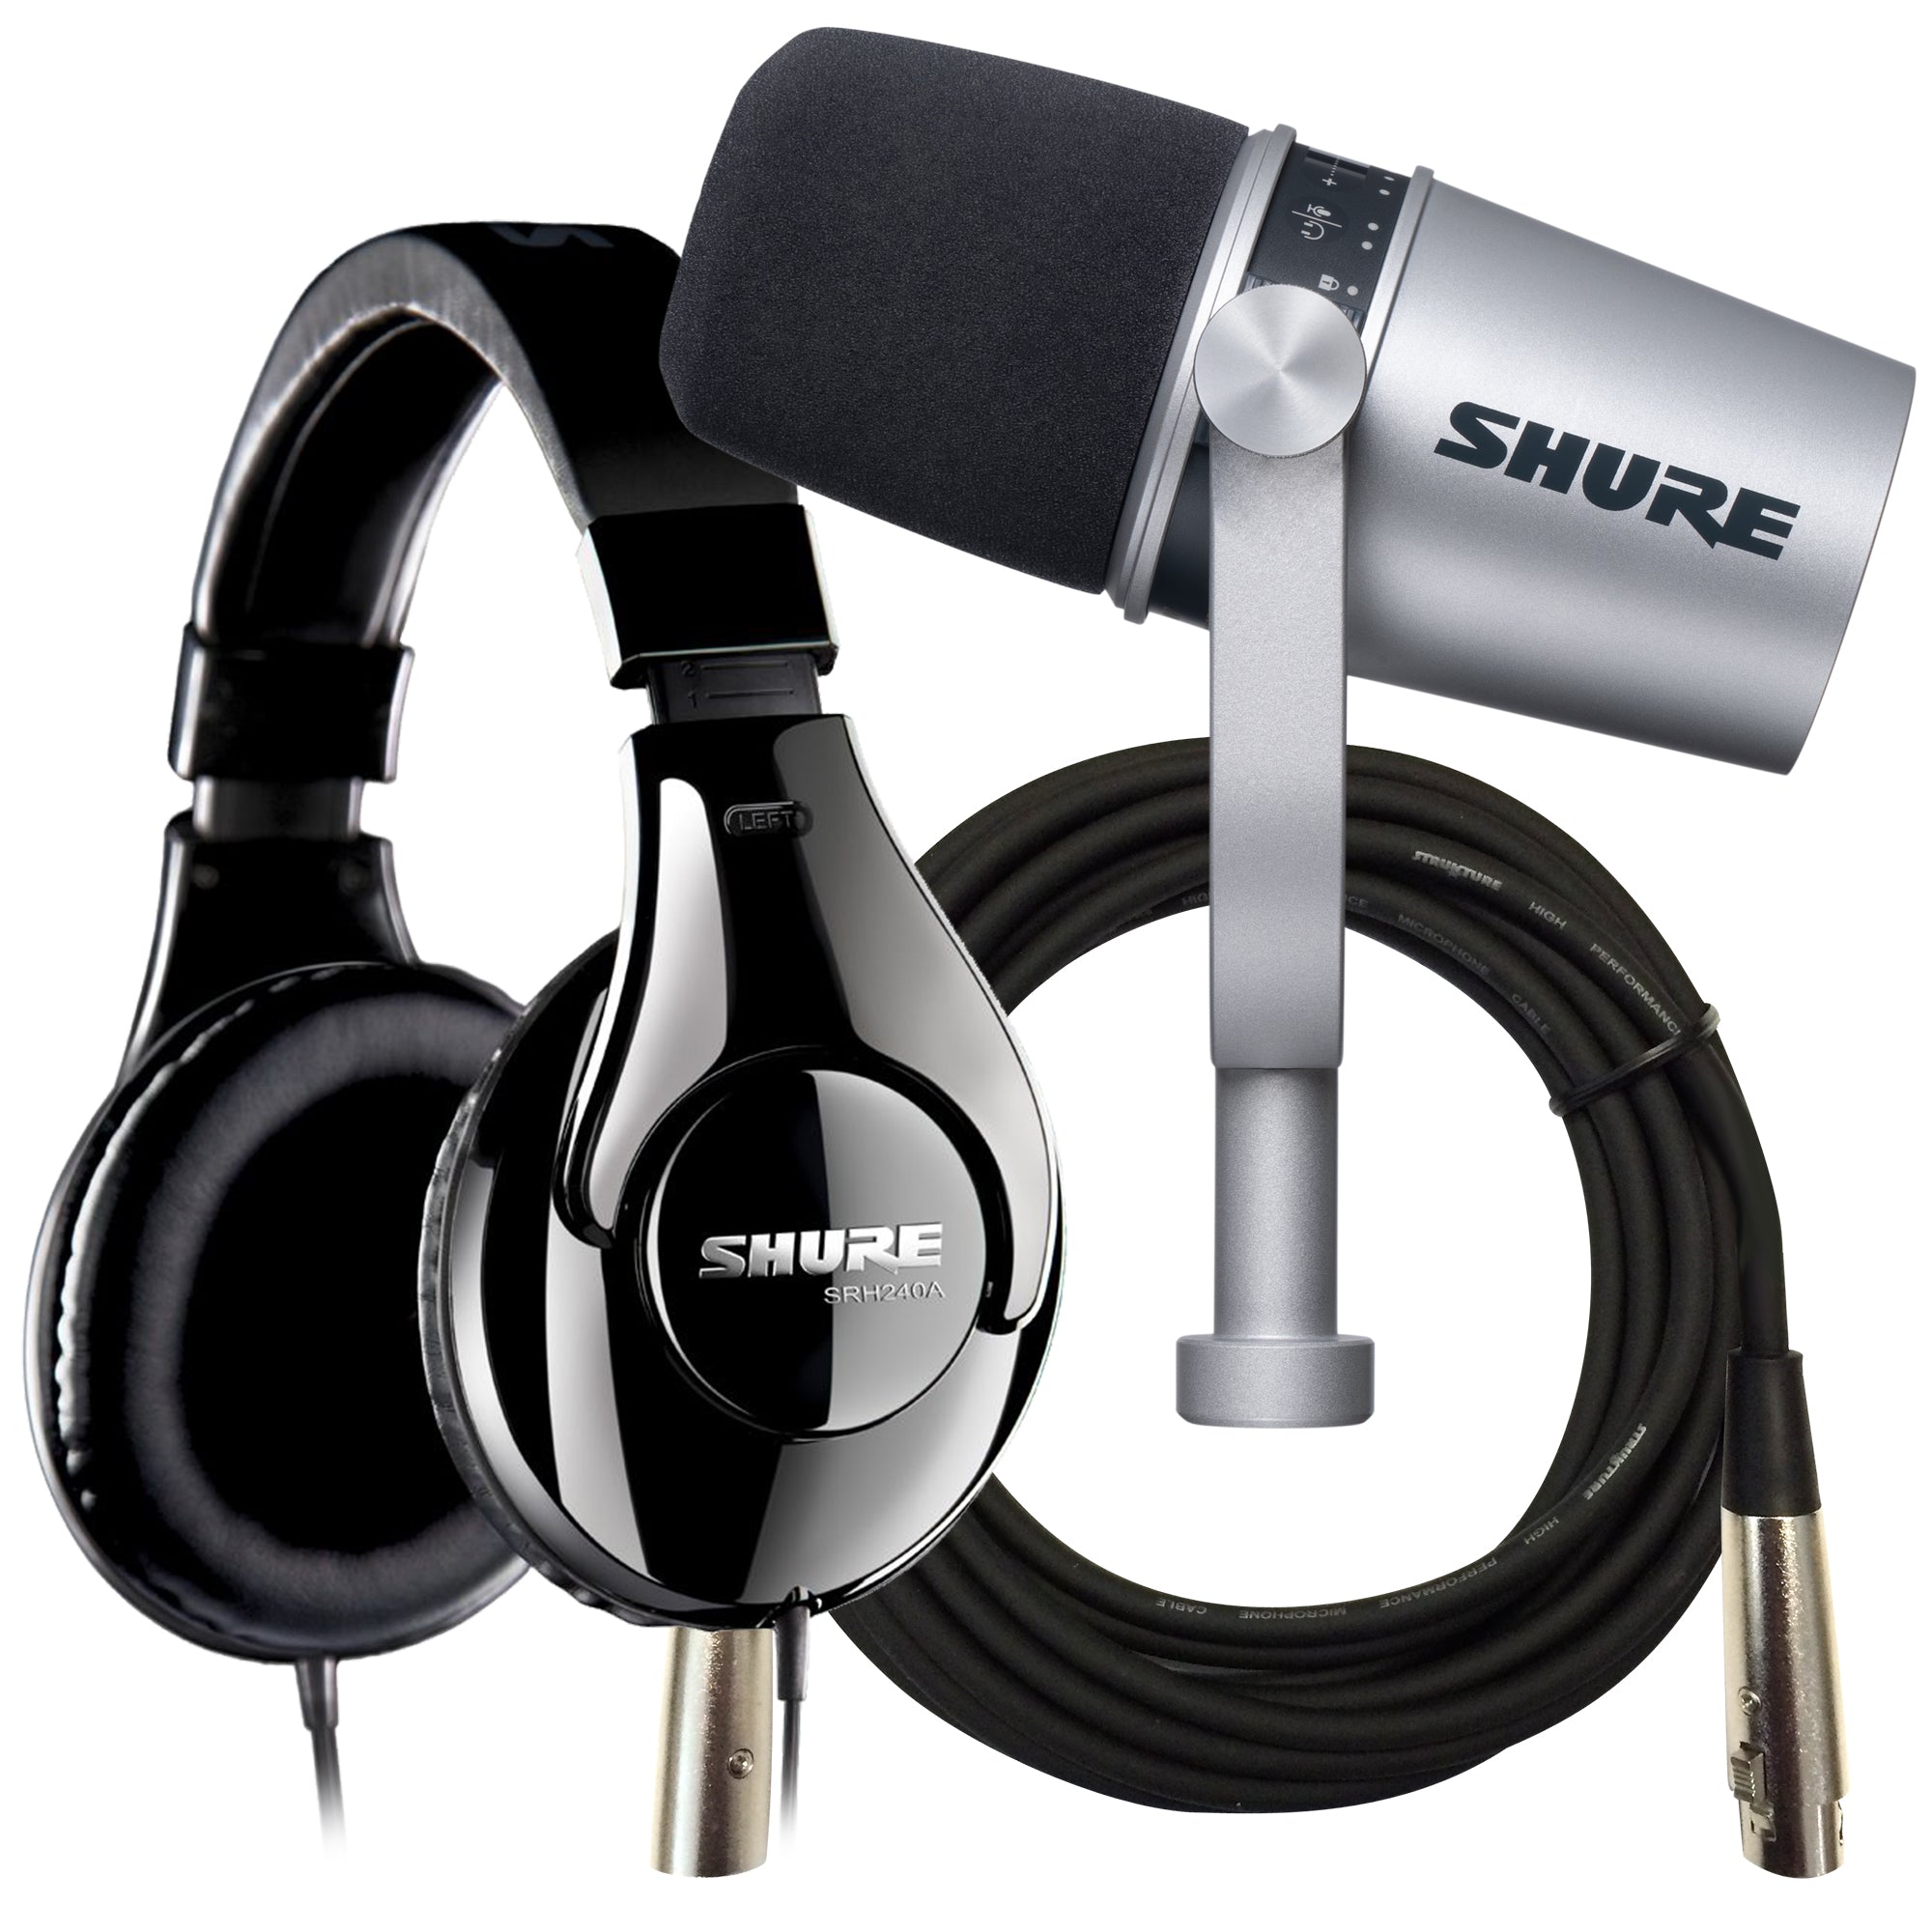 Bundle image collage of Shure MV7 Podcast Microphone - Silver BONUS PAK bundle